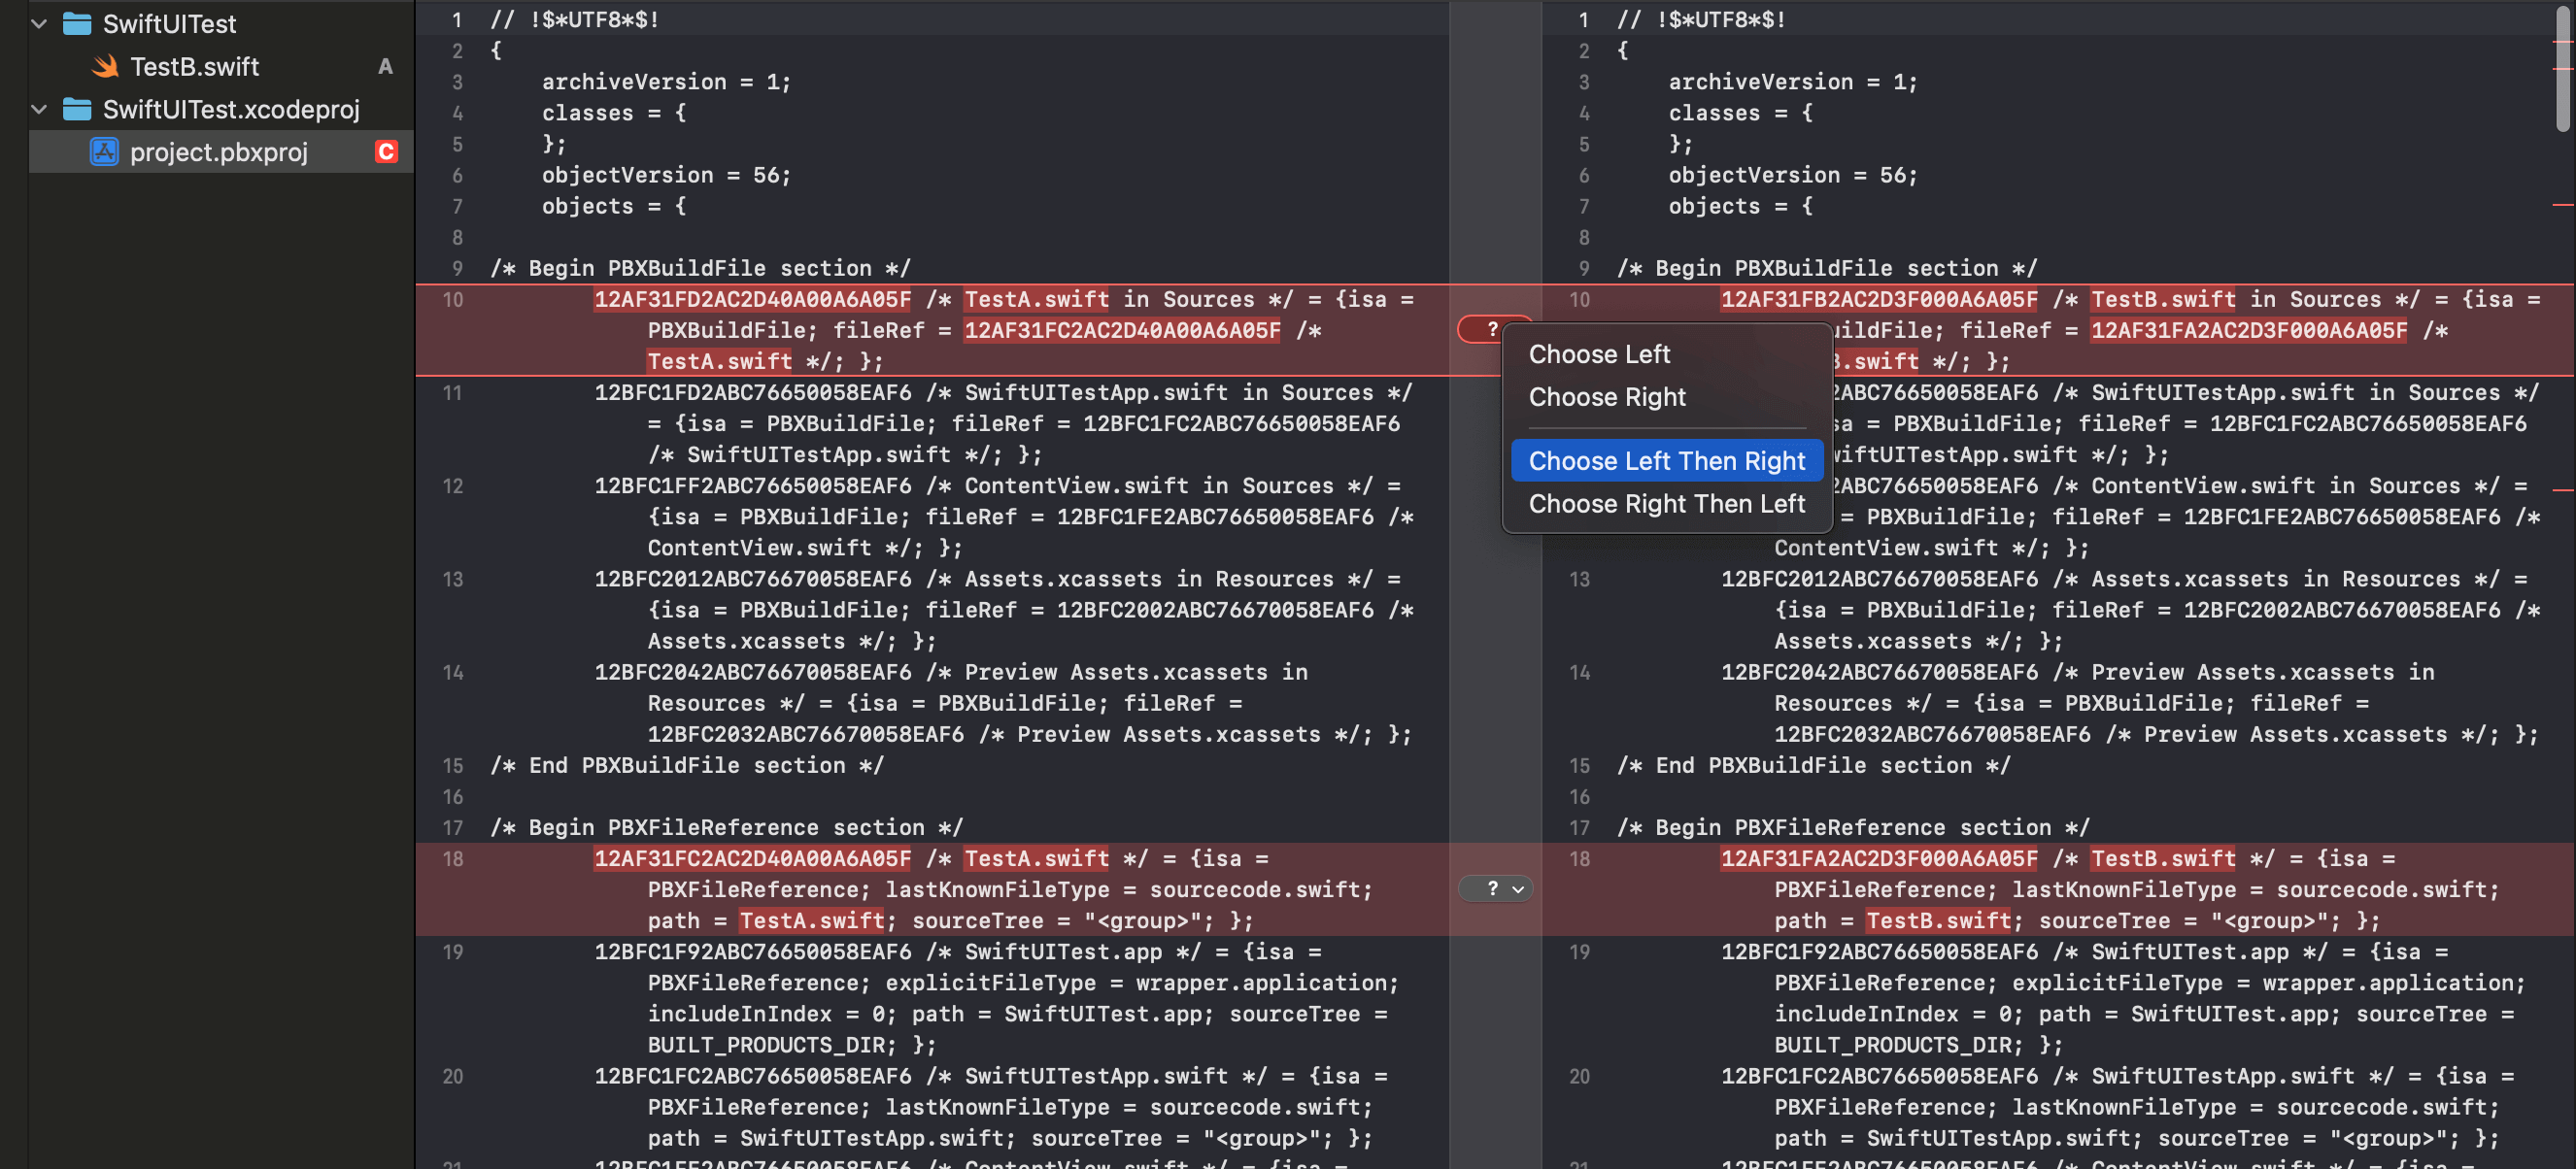 【Xcode/Git】.xcodeprojファイルのコンフリクト解消方法